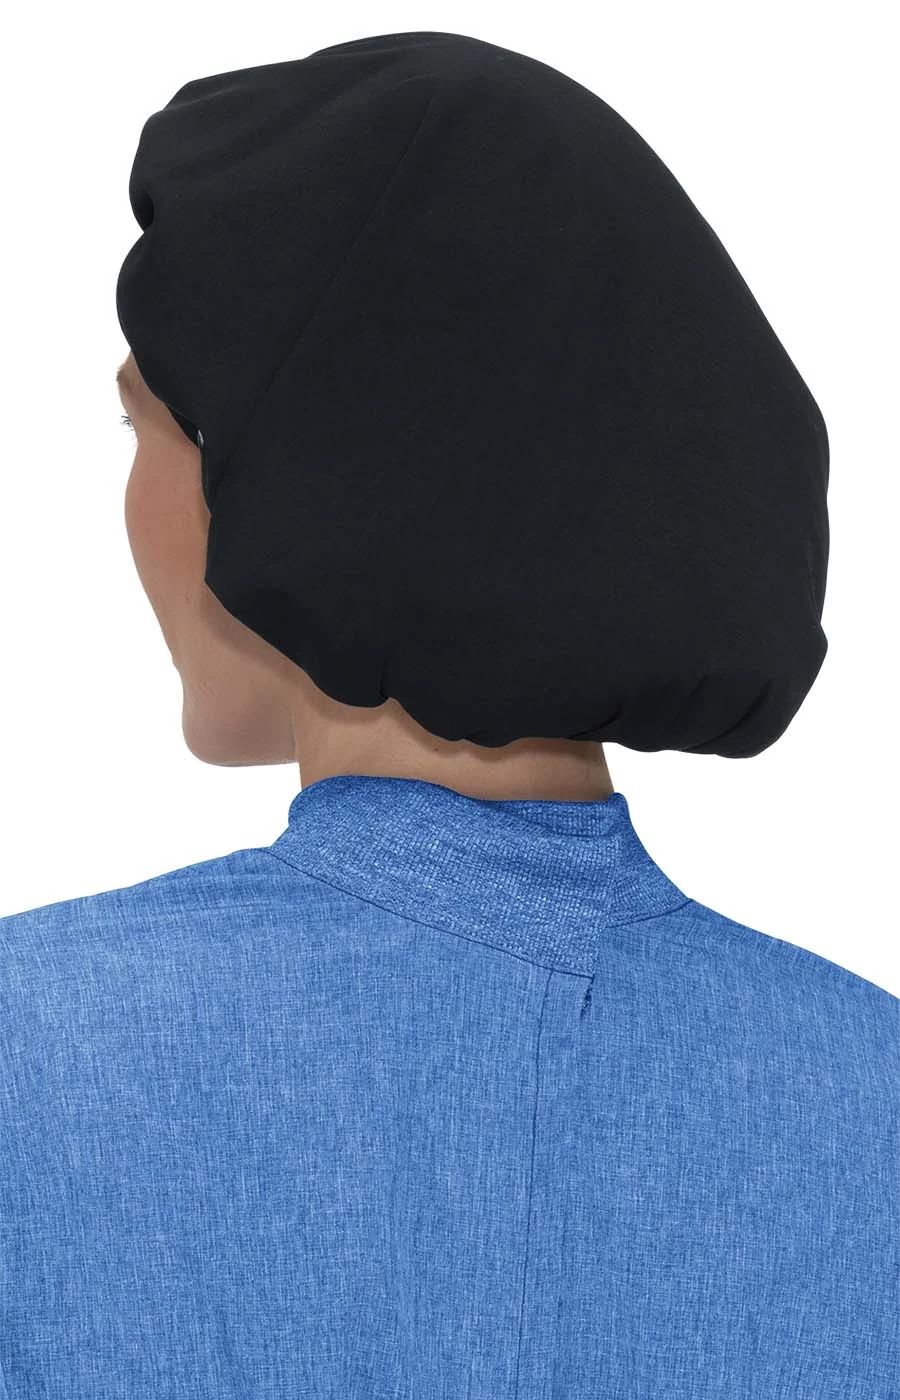 Koi Surgical Hats Black